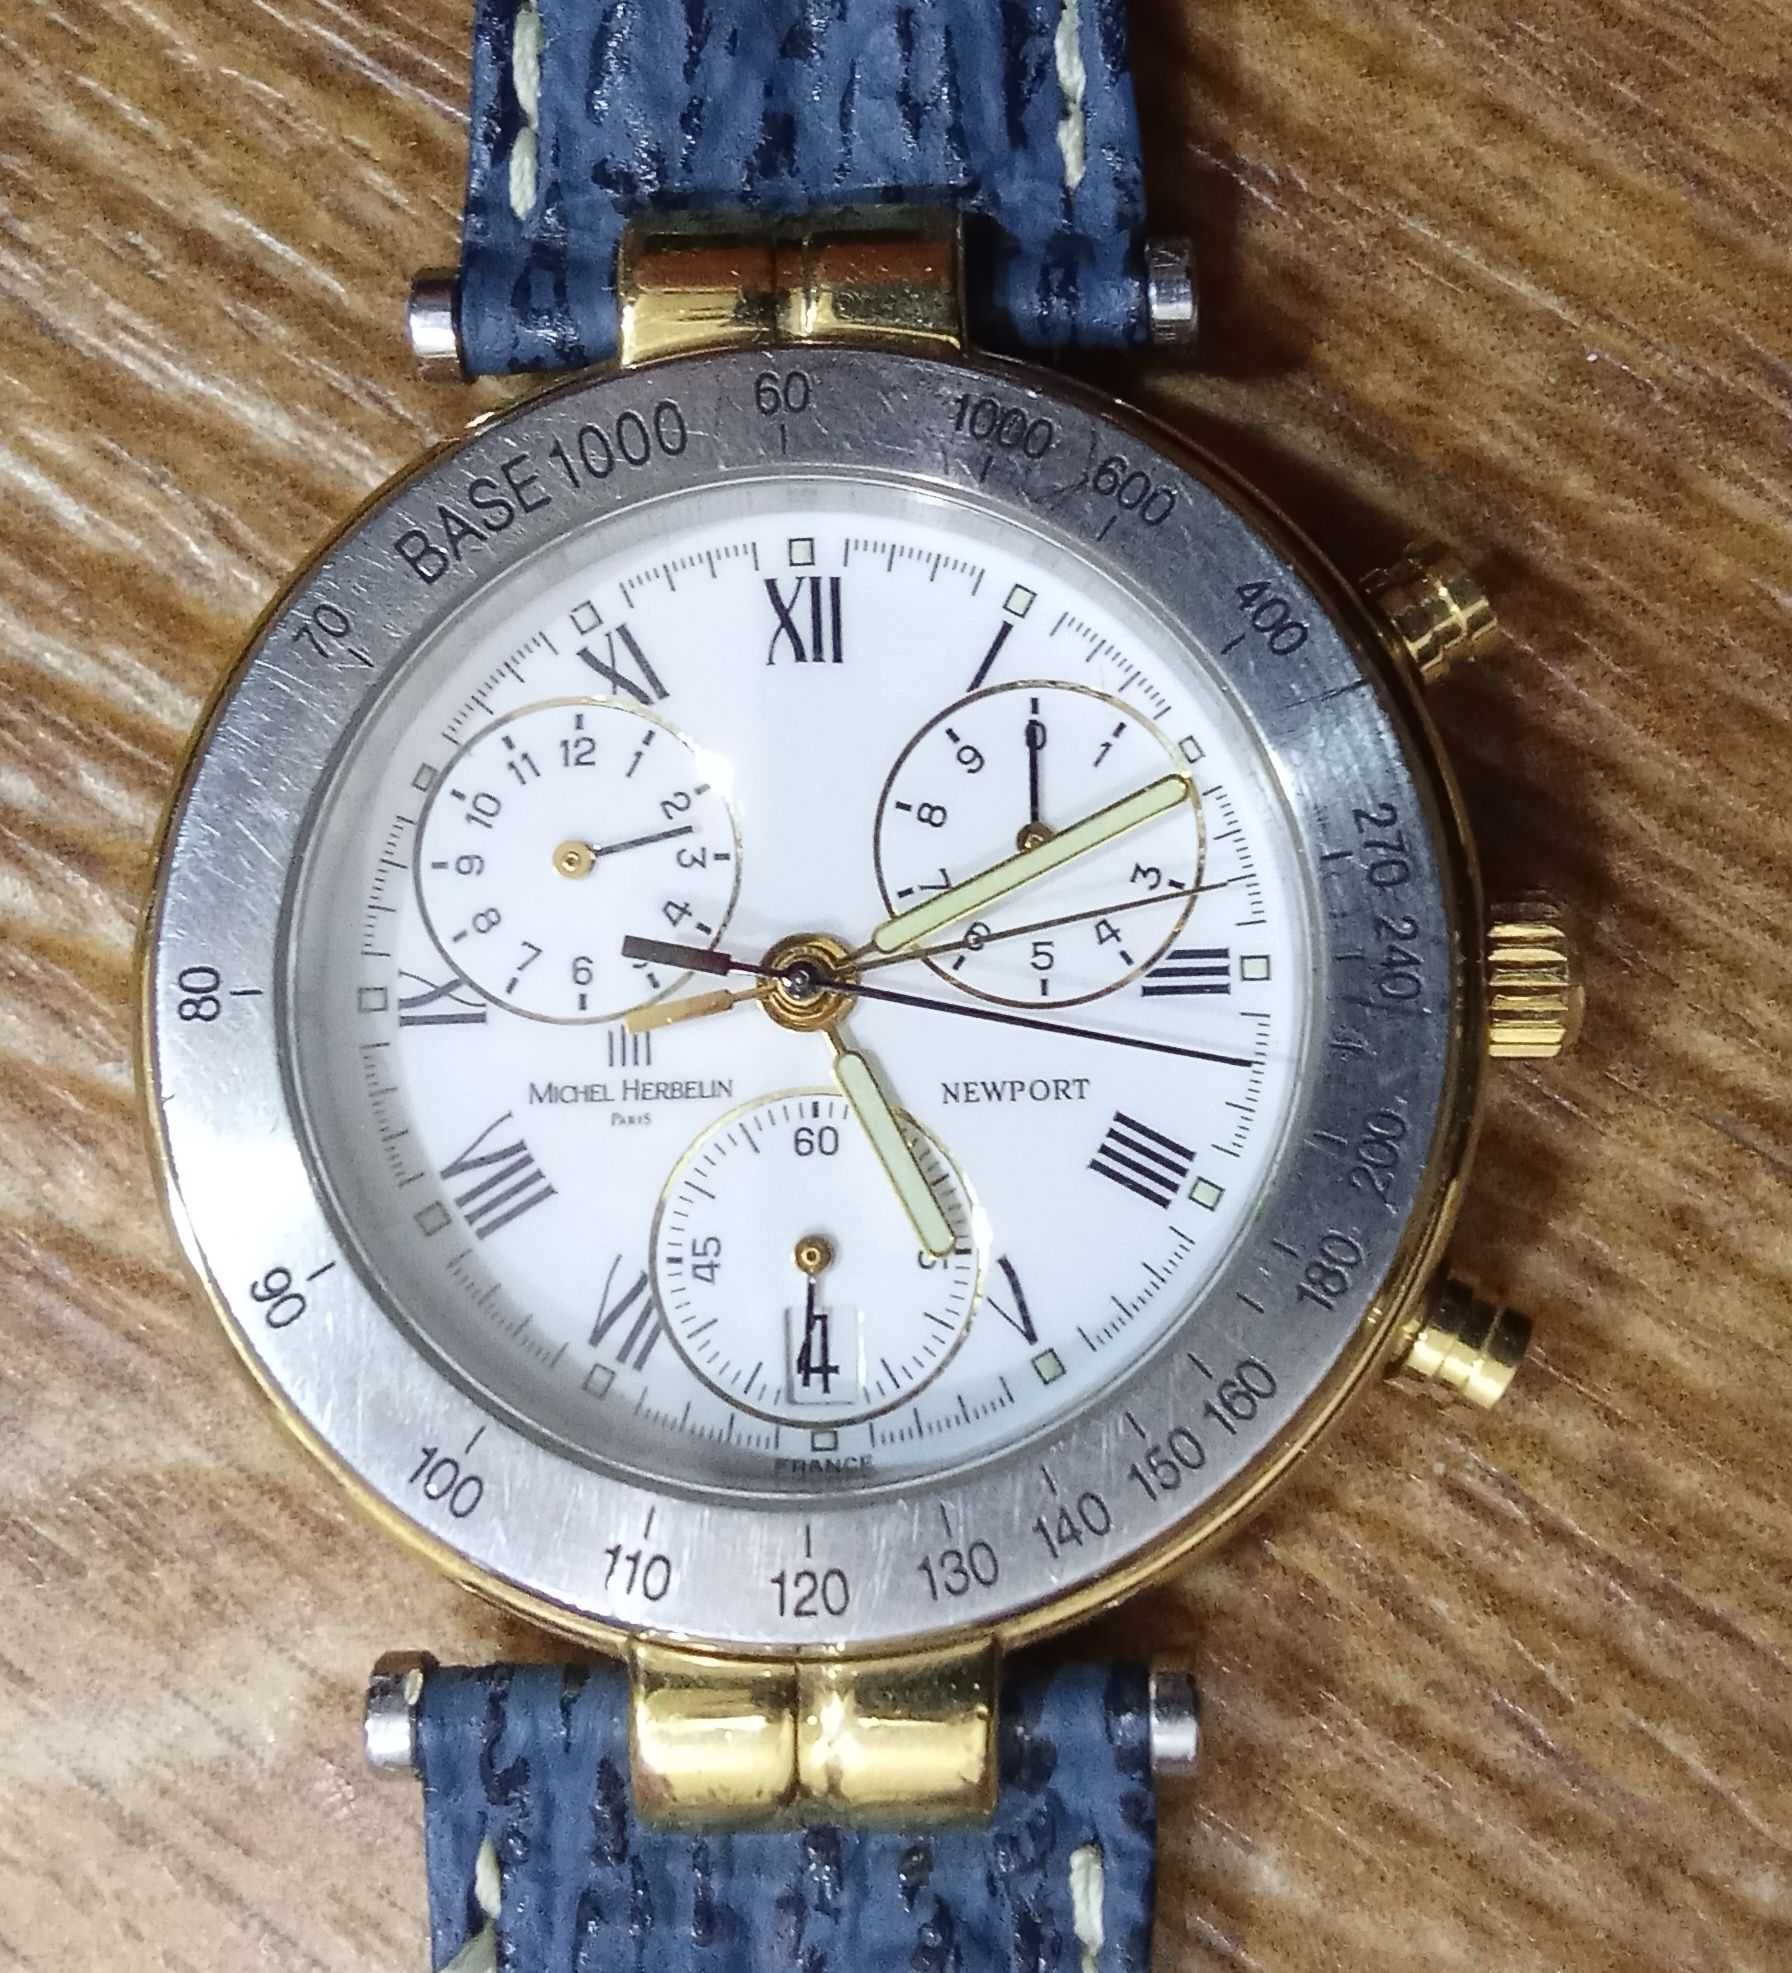 Michel herbeli наручные часы с хронографом.